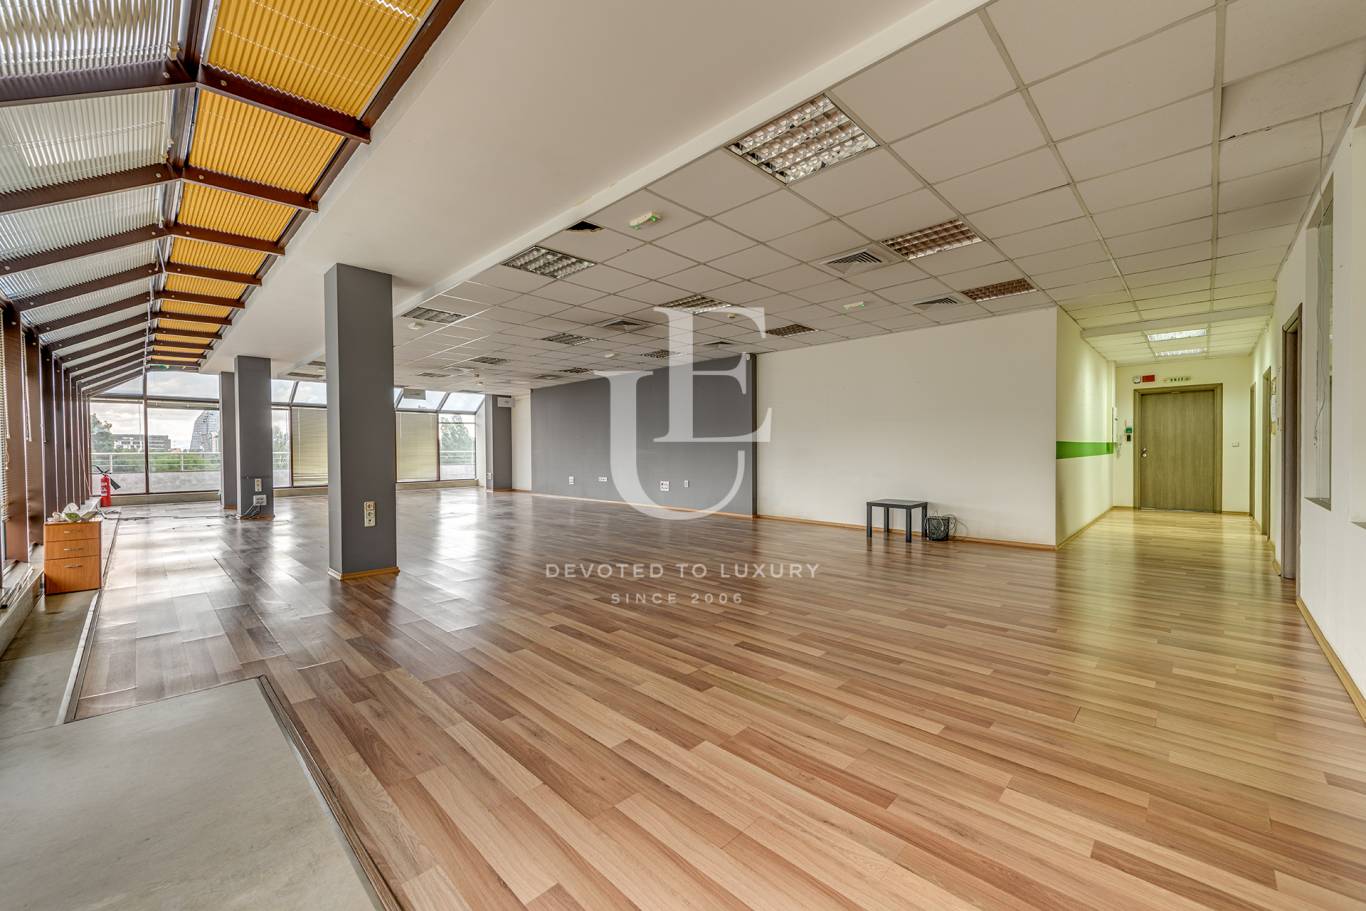 Офис под наем в София, Студентски град - код на имота: K17624 - image 1